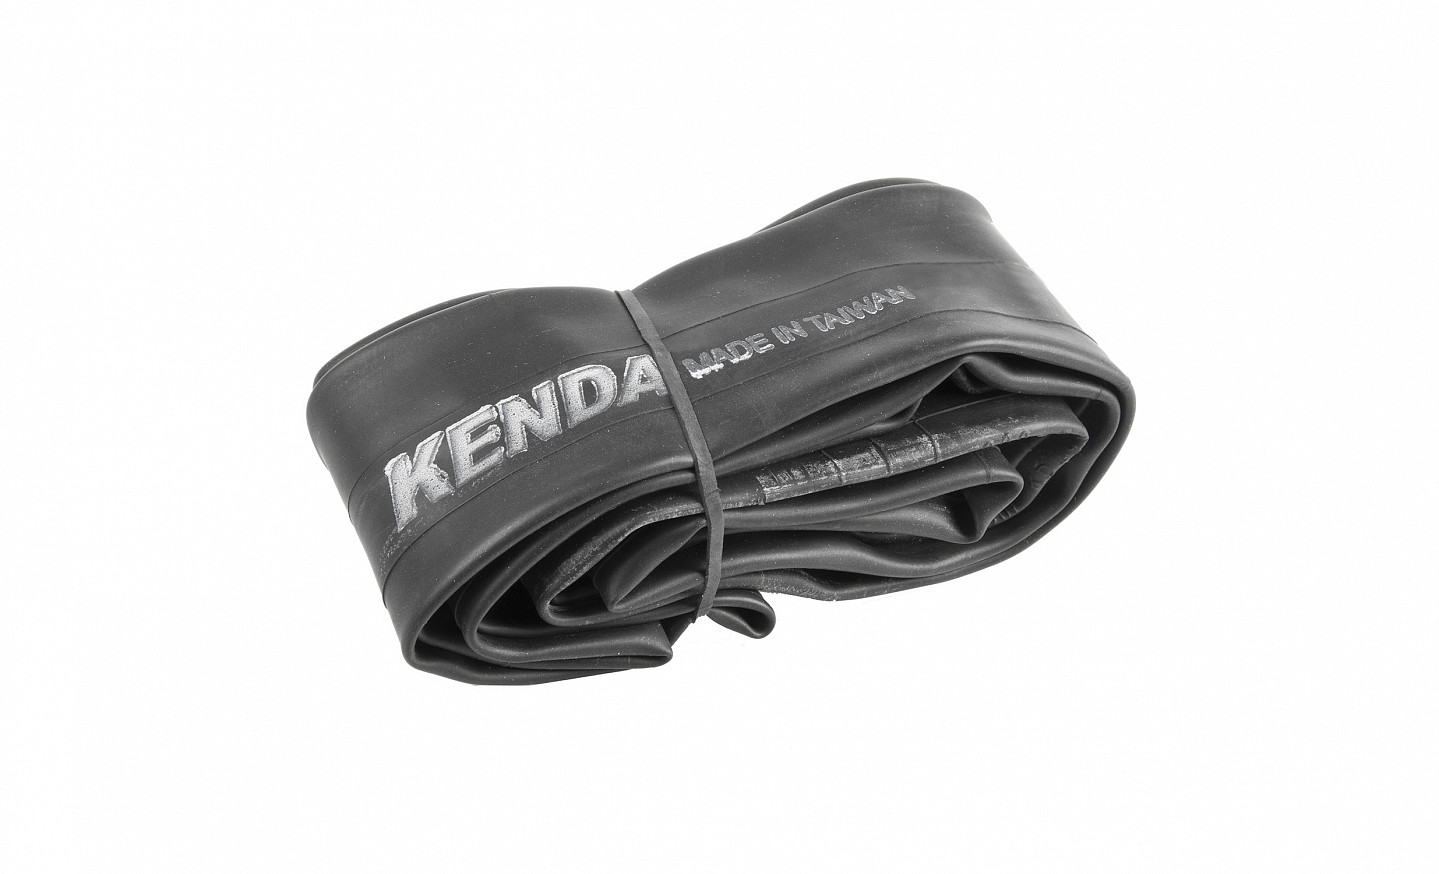 KENDA 700 x 18 - 25C bicycle tube